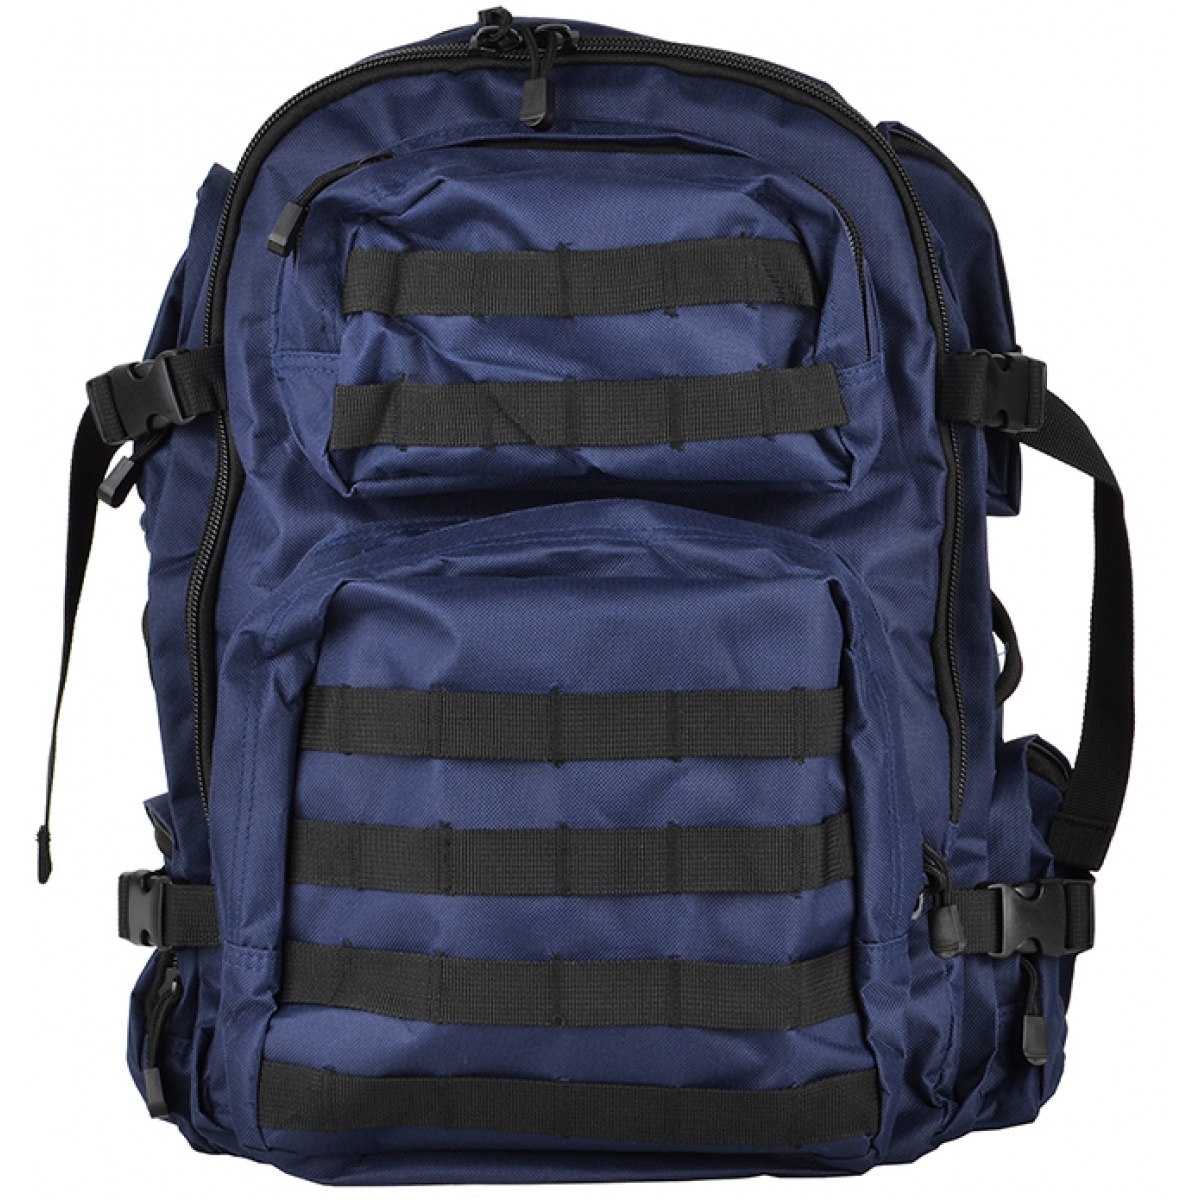 NcStar VISM Tactical MOLLE Backpack - Navy Blue w/ Black Trim | Airsoft ...